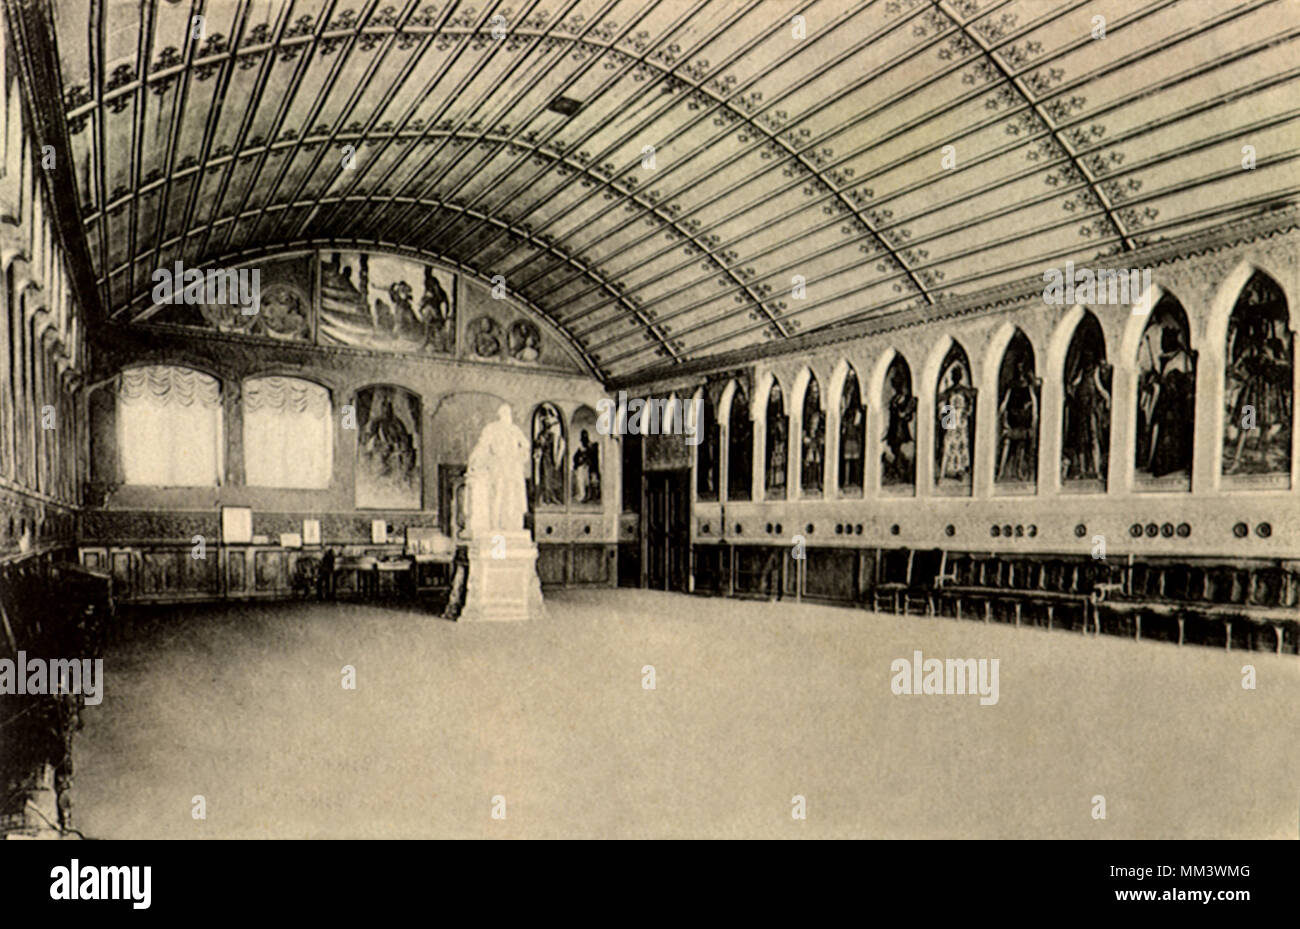 El emperador Hall. Frankfurt. 1930 Foto de stock